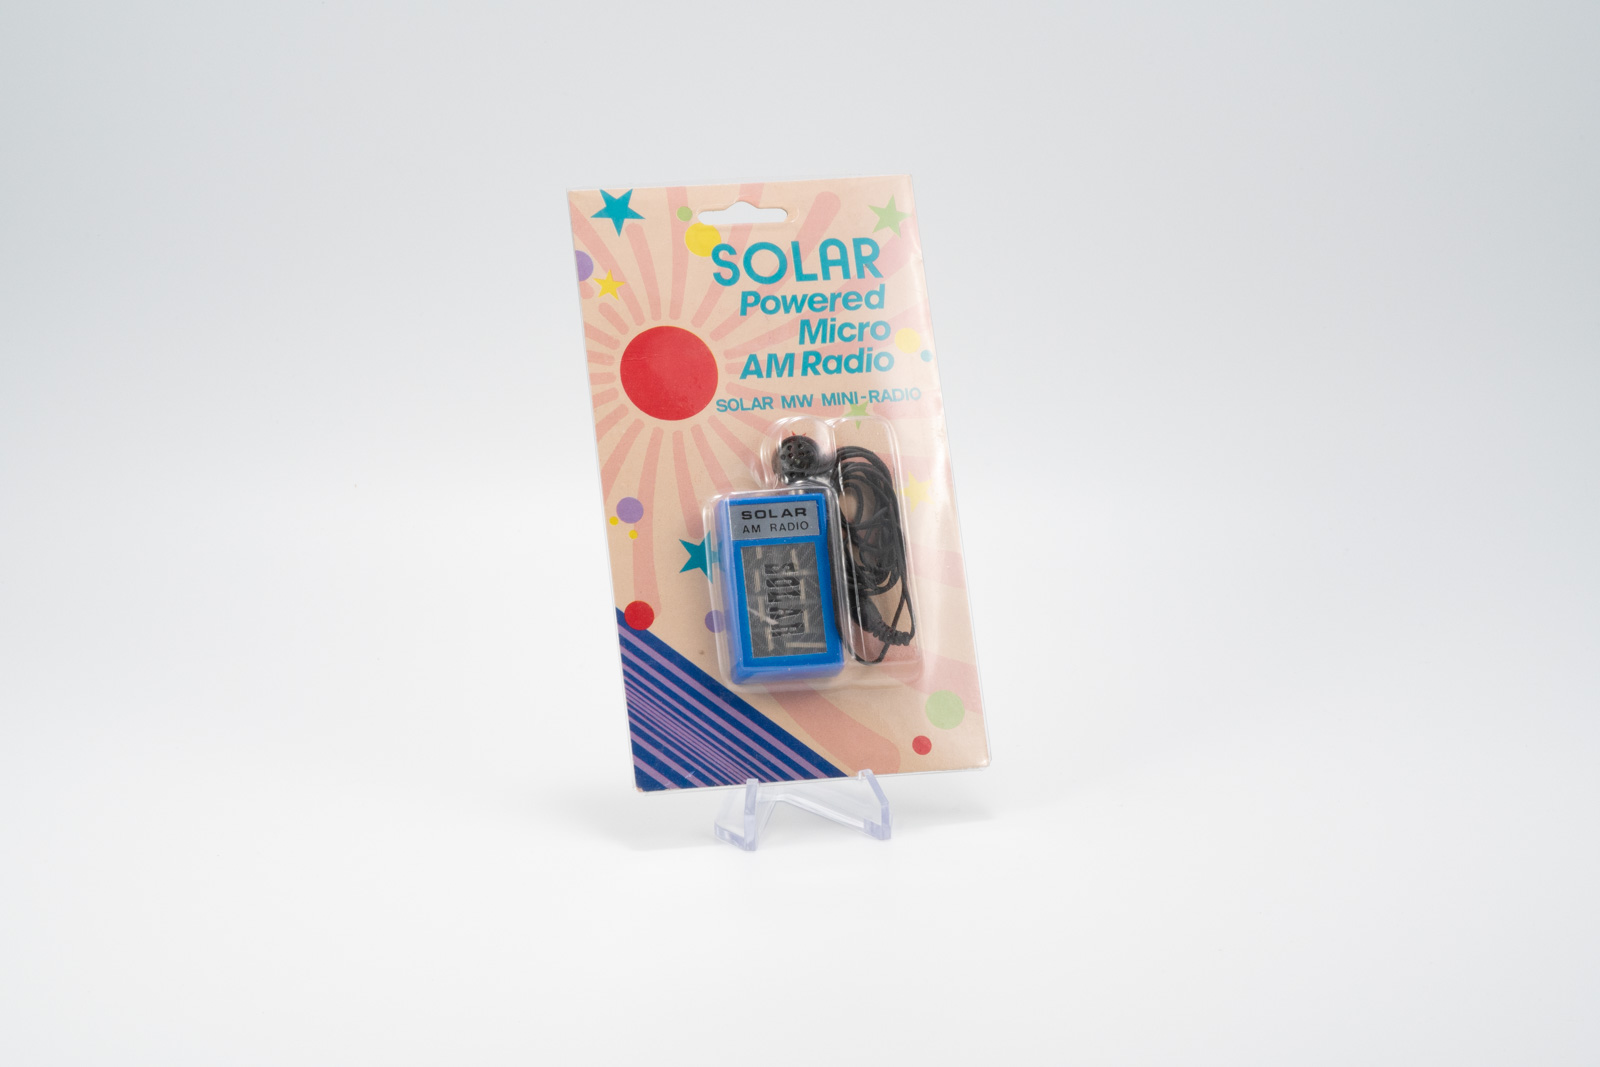 Micro Solar AM Radio